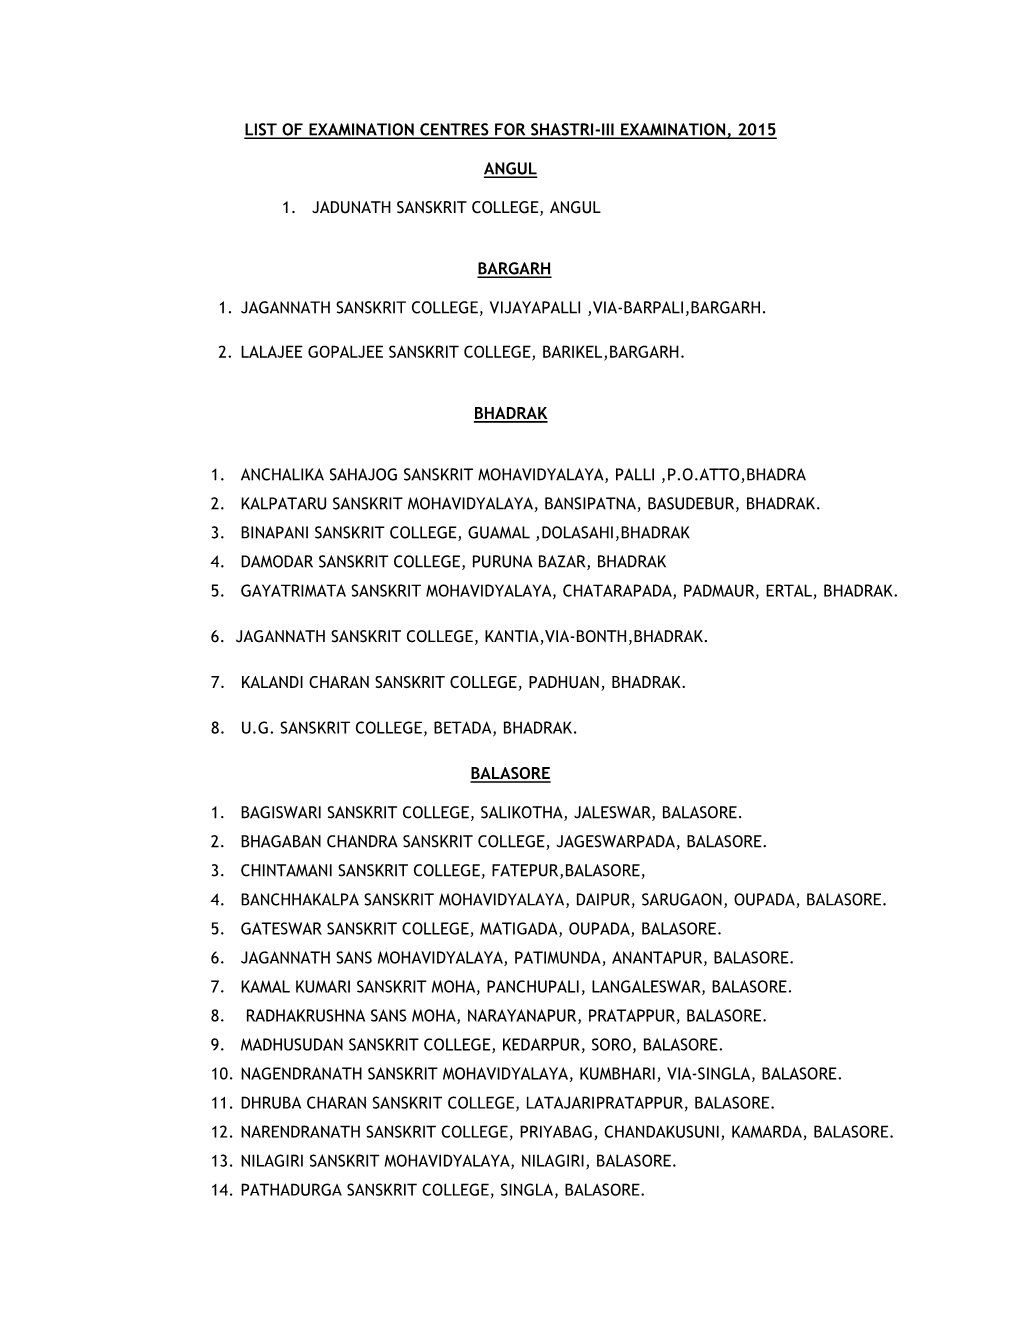 List of Examination Centres for Shastri-Iii Examination, 2015